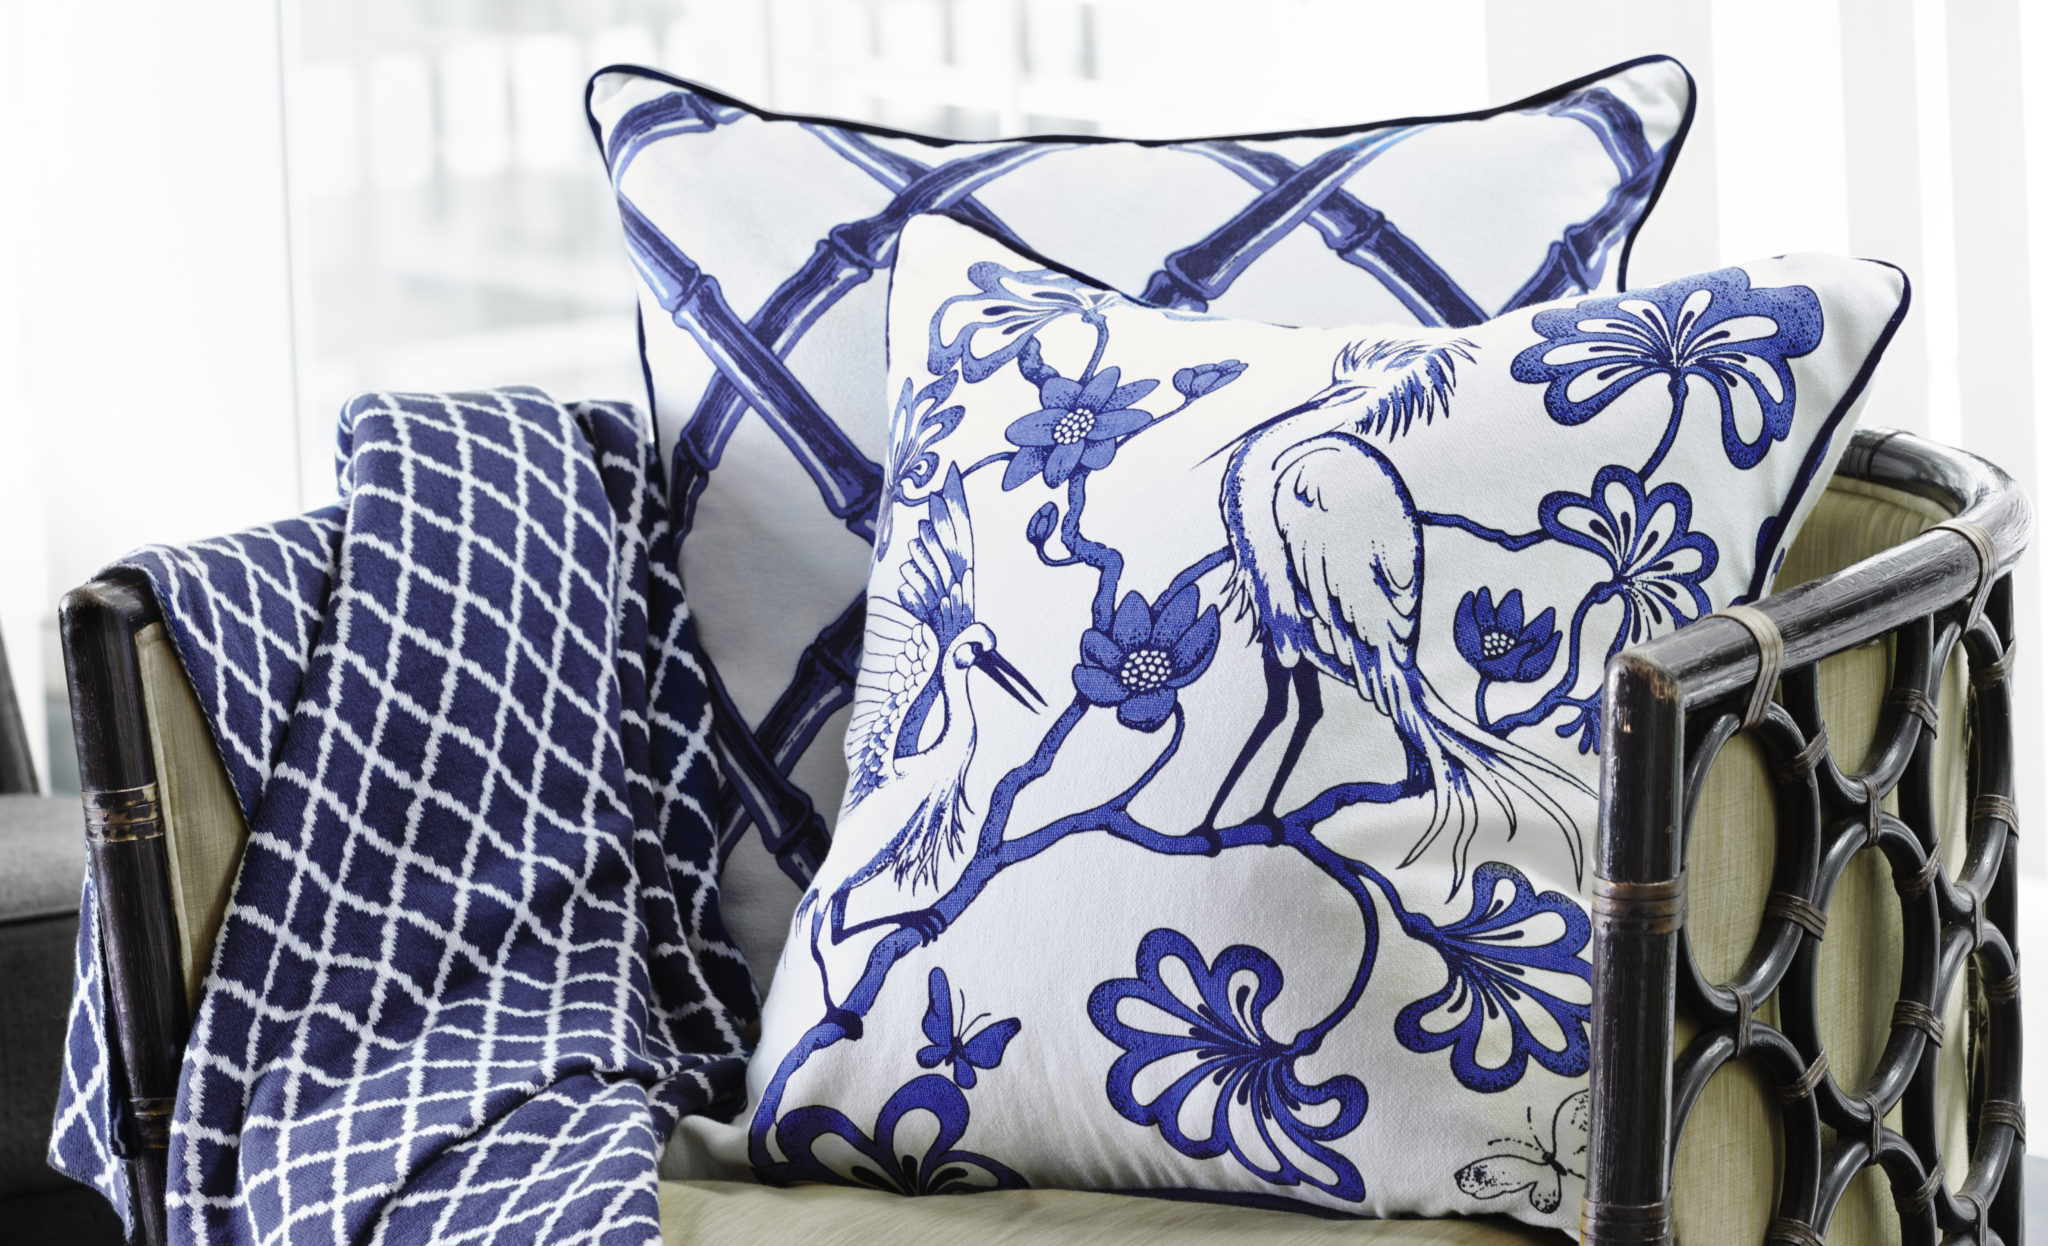 florence broadhurst cushions online